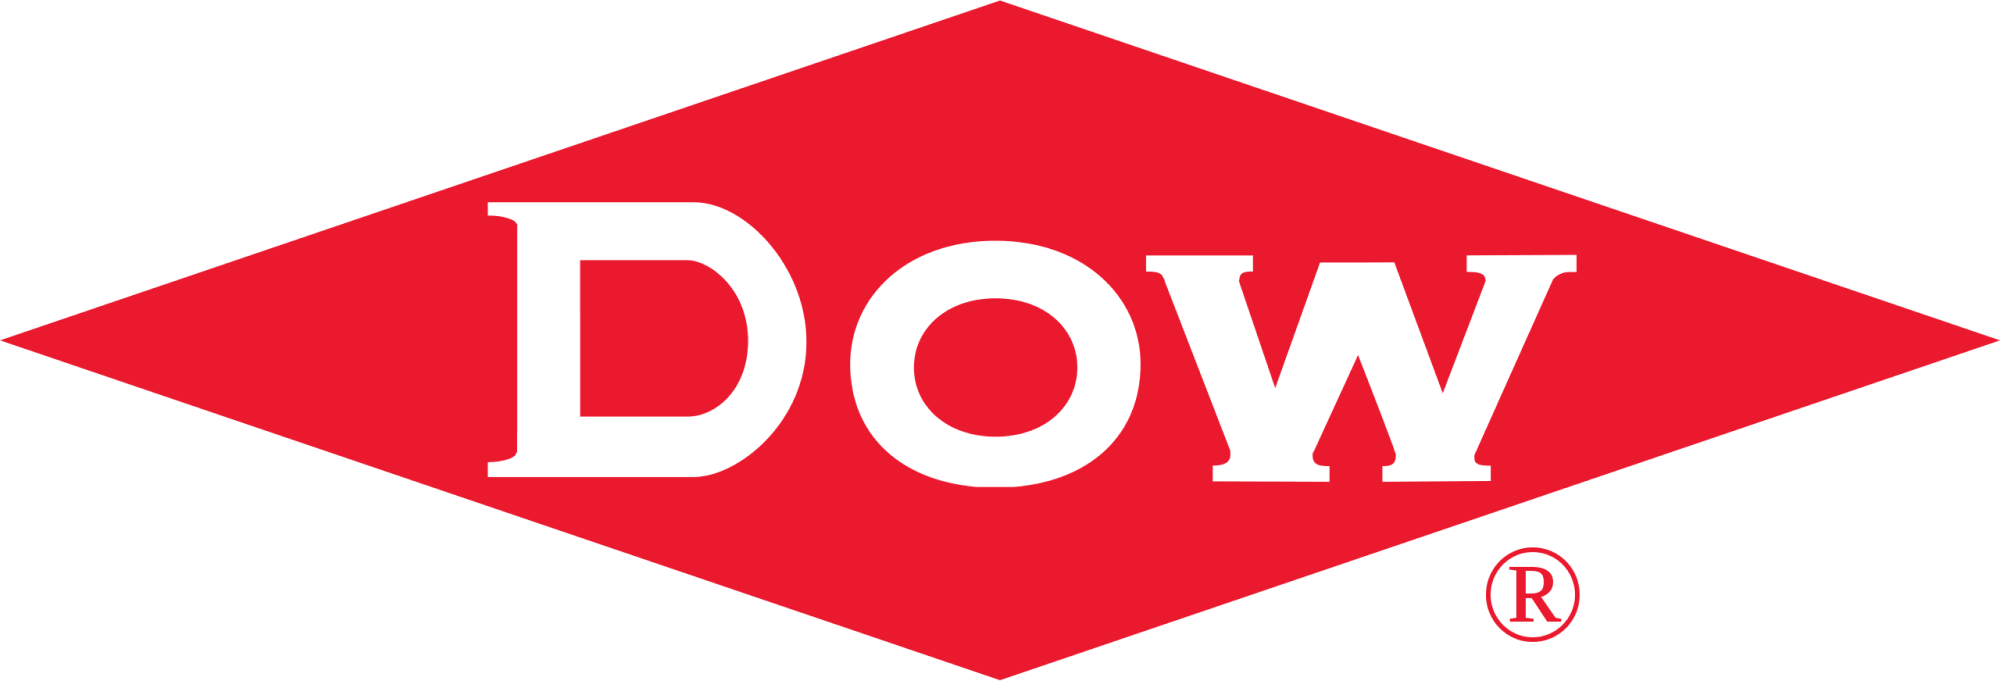 Dow logo on transparent background